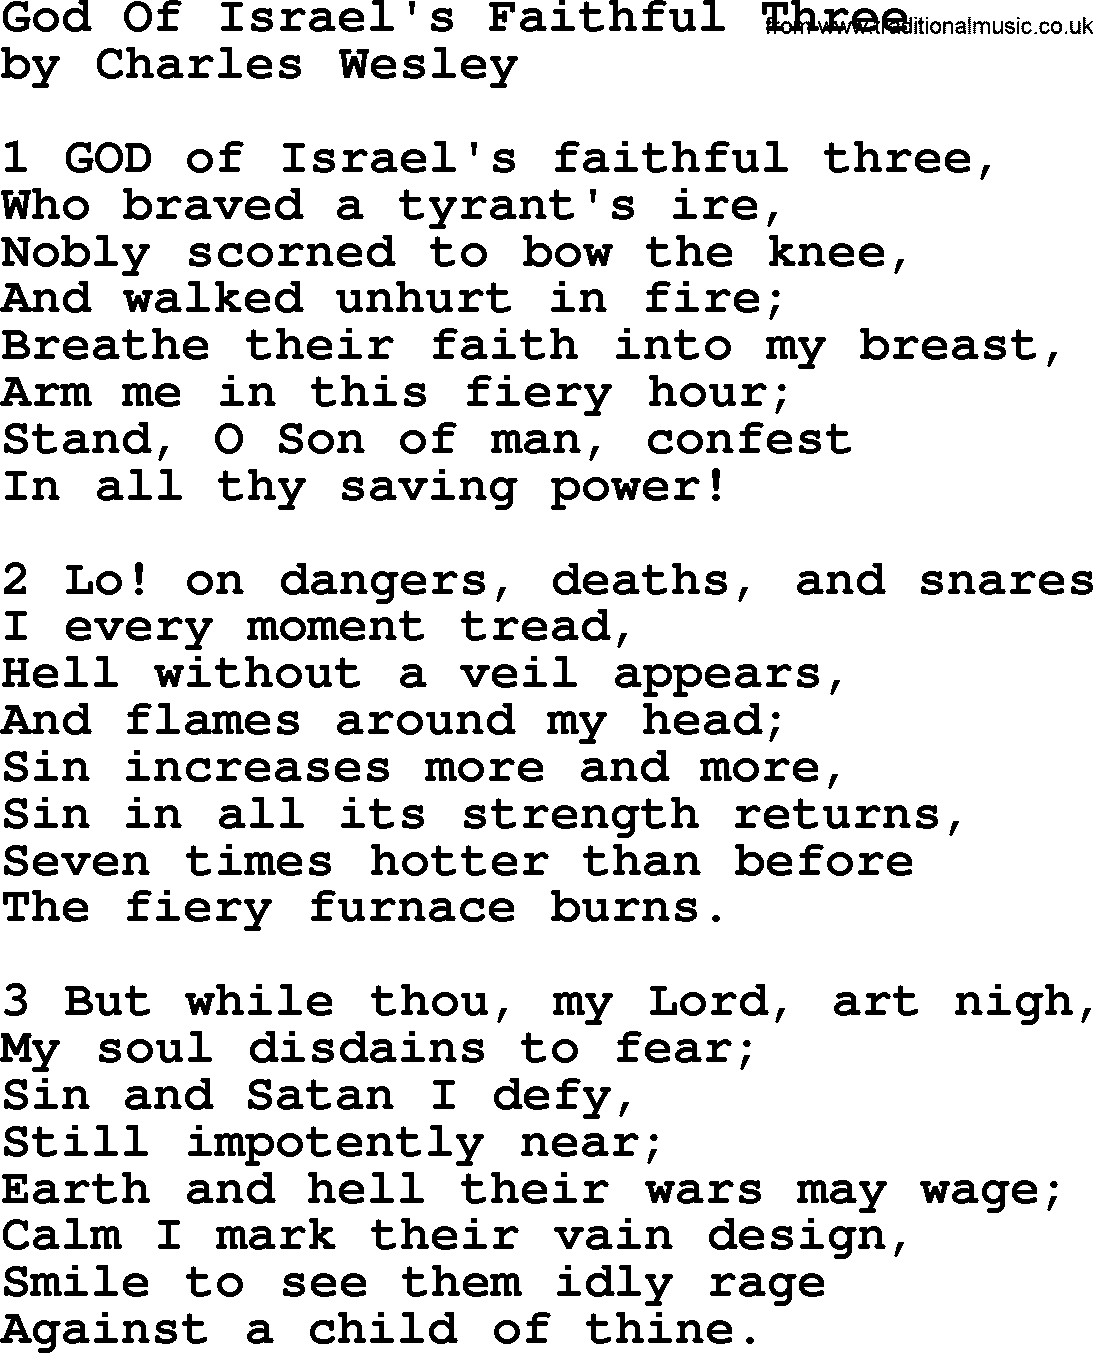 Charles Wesley hymn: God Of Israel's Faithful Three, lyrics